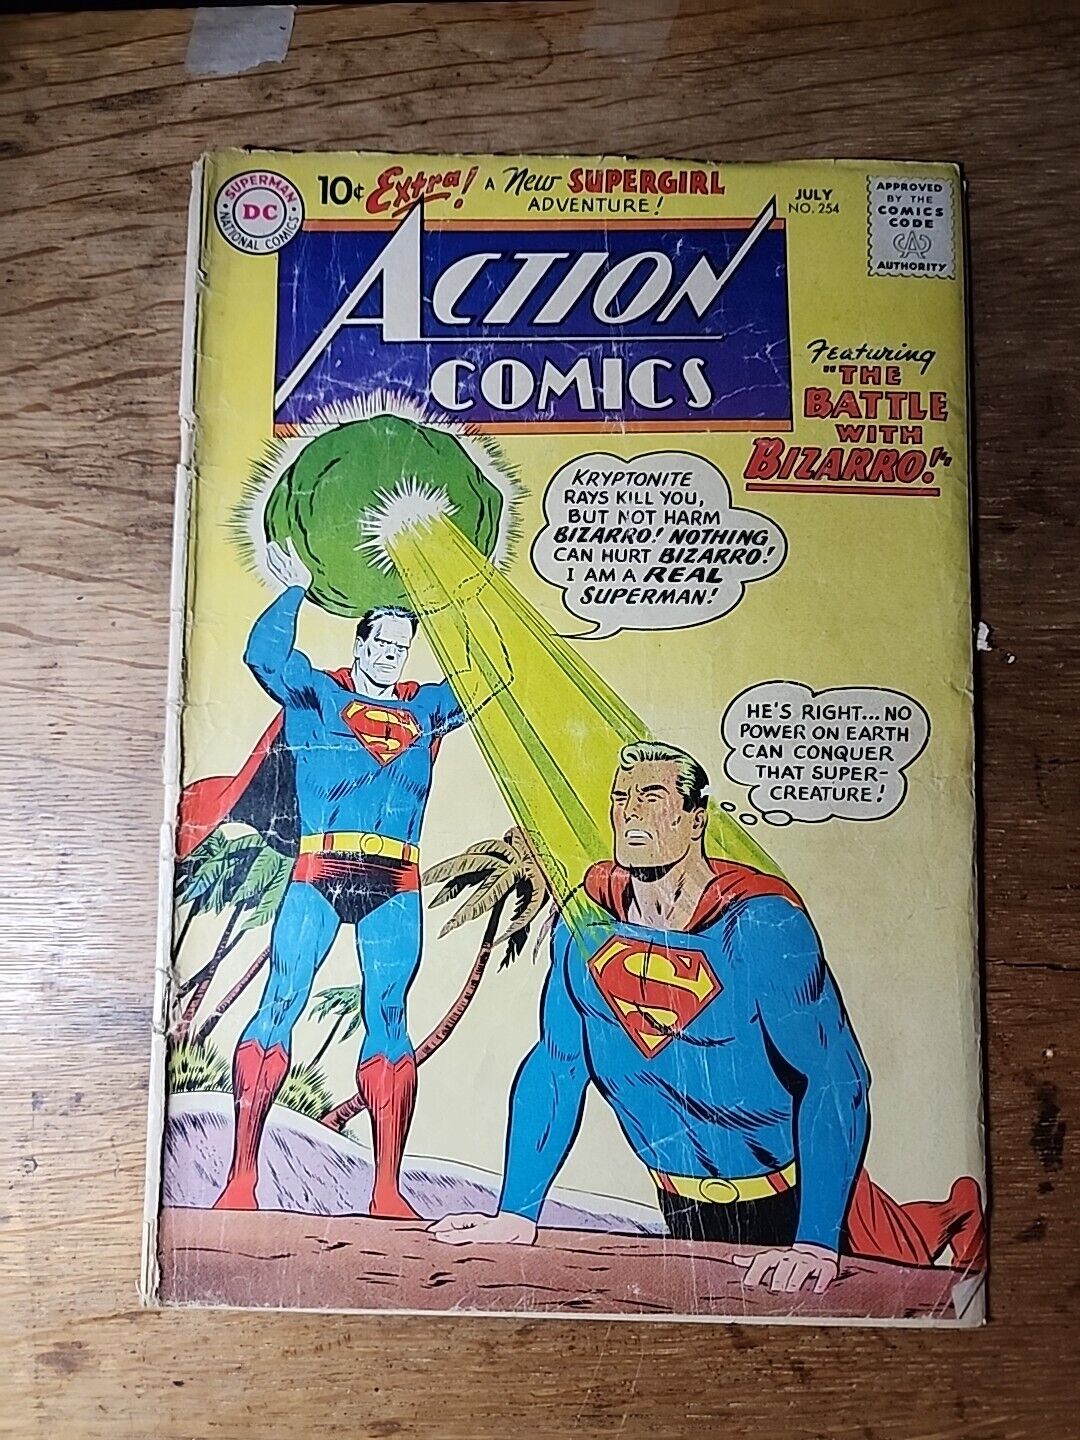 Action Comics No. 254 July 1959 - DC Silver Age Superman Comic w/Bizarro  (poor)